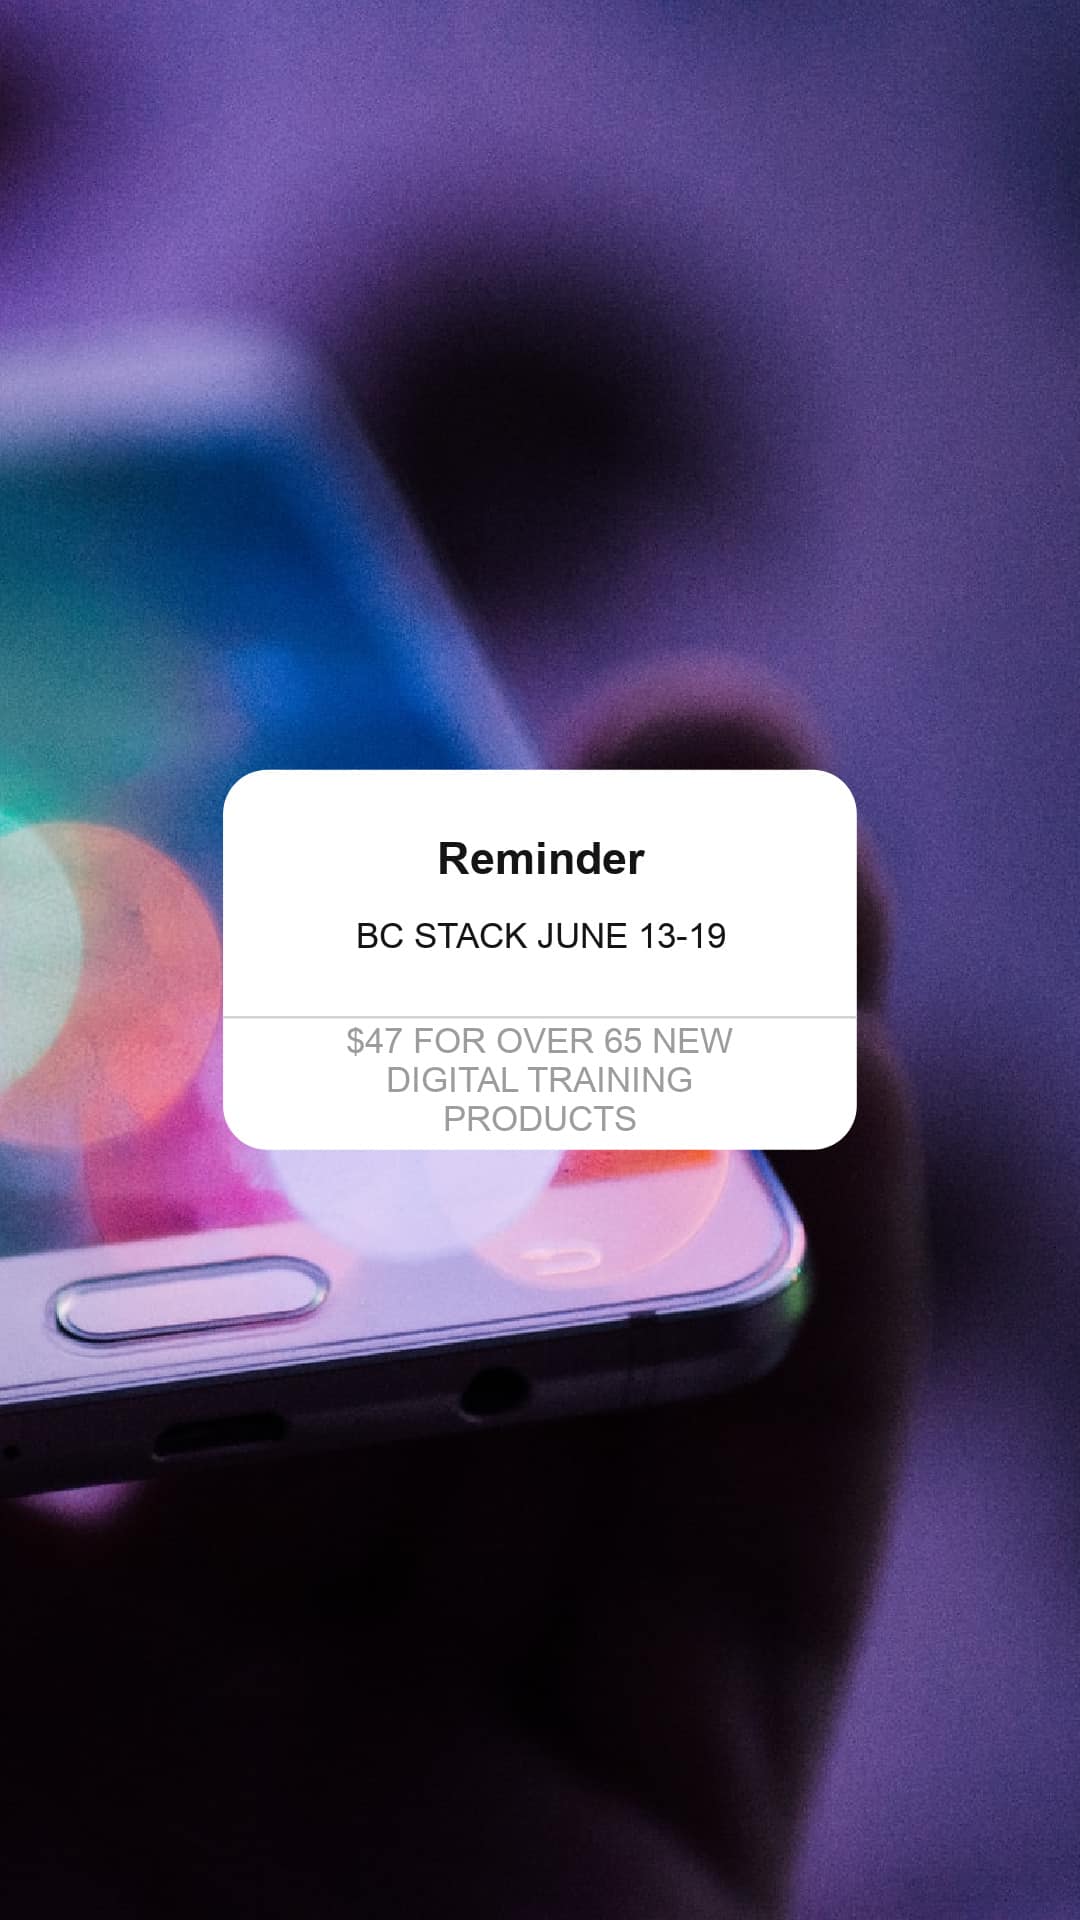 Last reminder for BC Stack 2021 